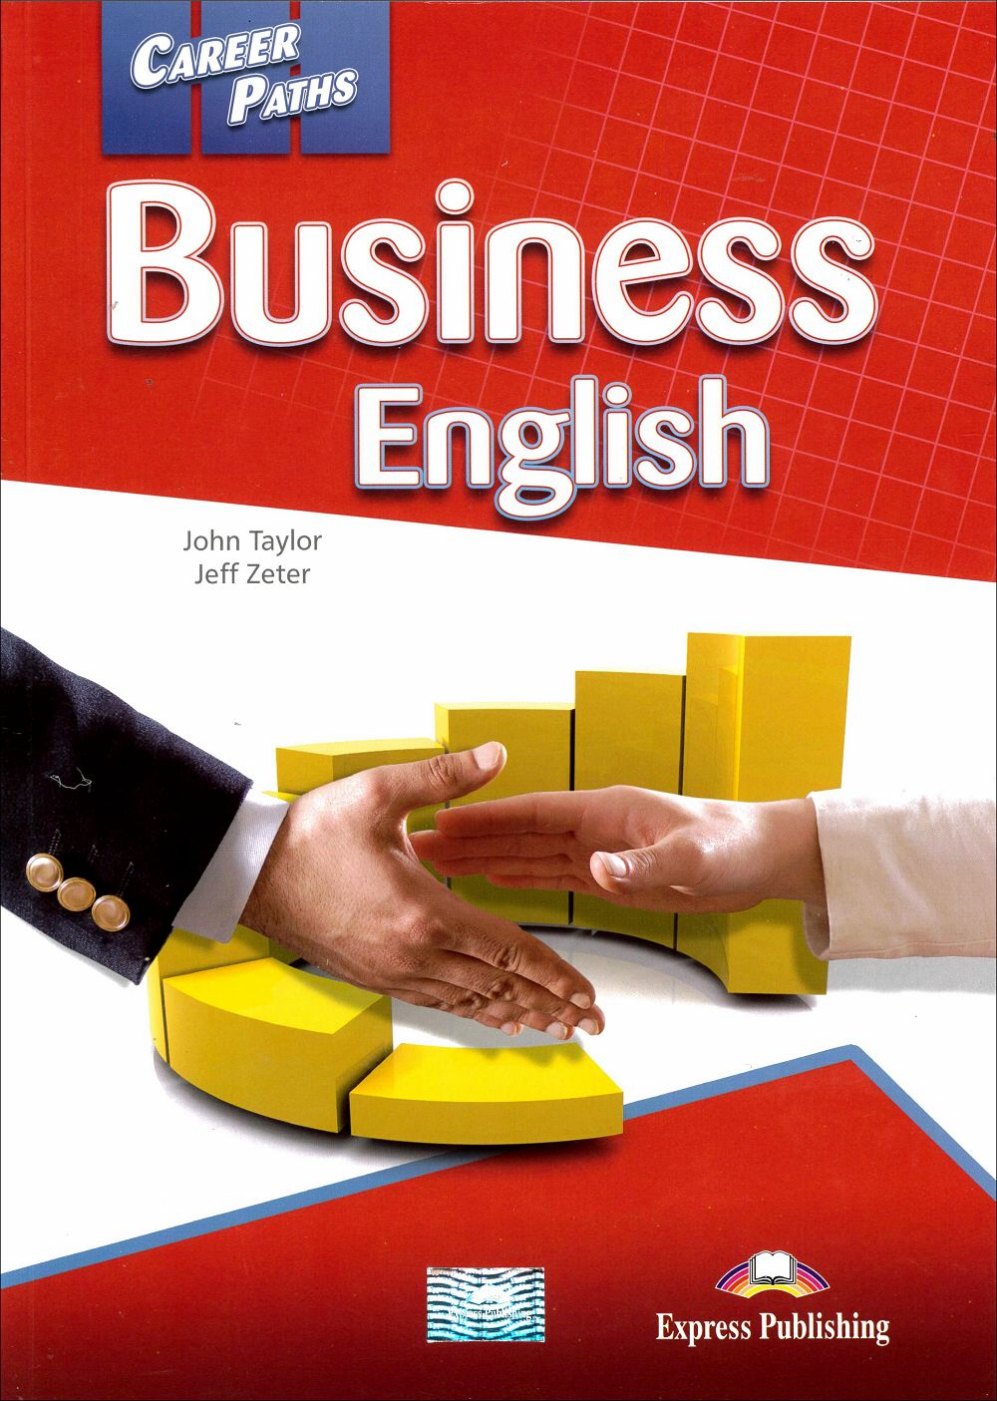 Career Paths: Business English...